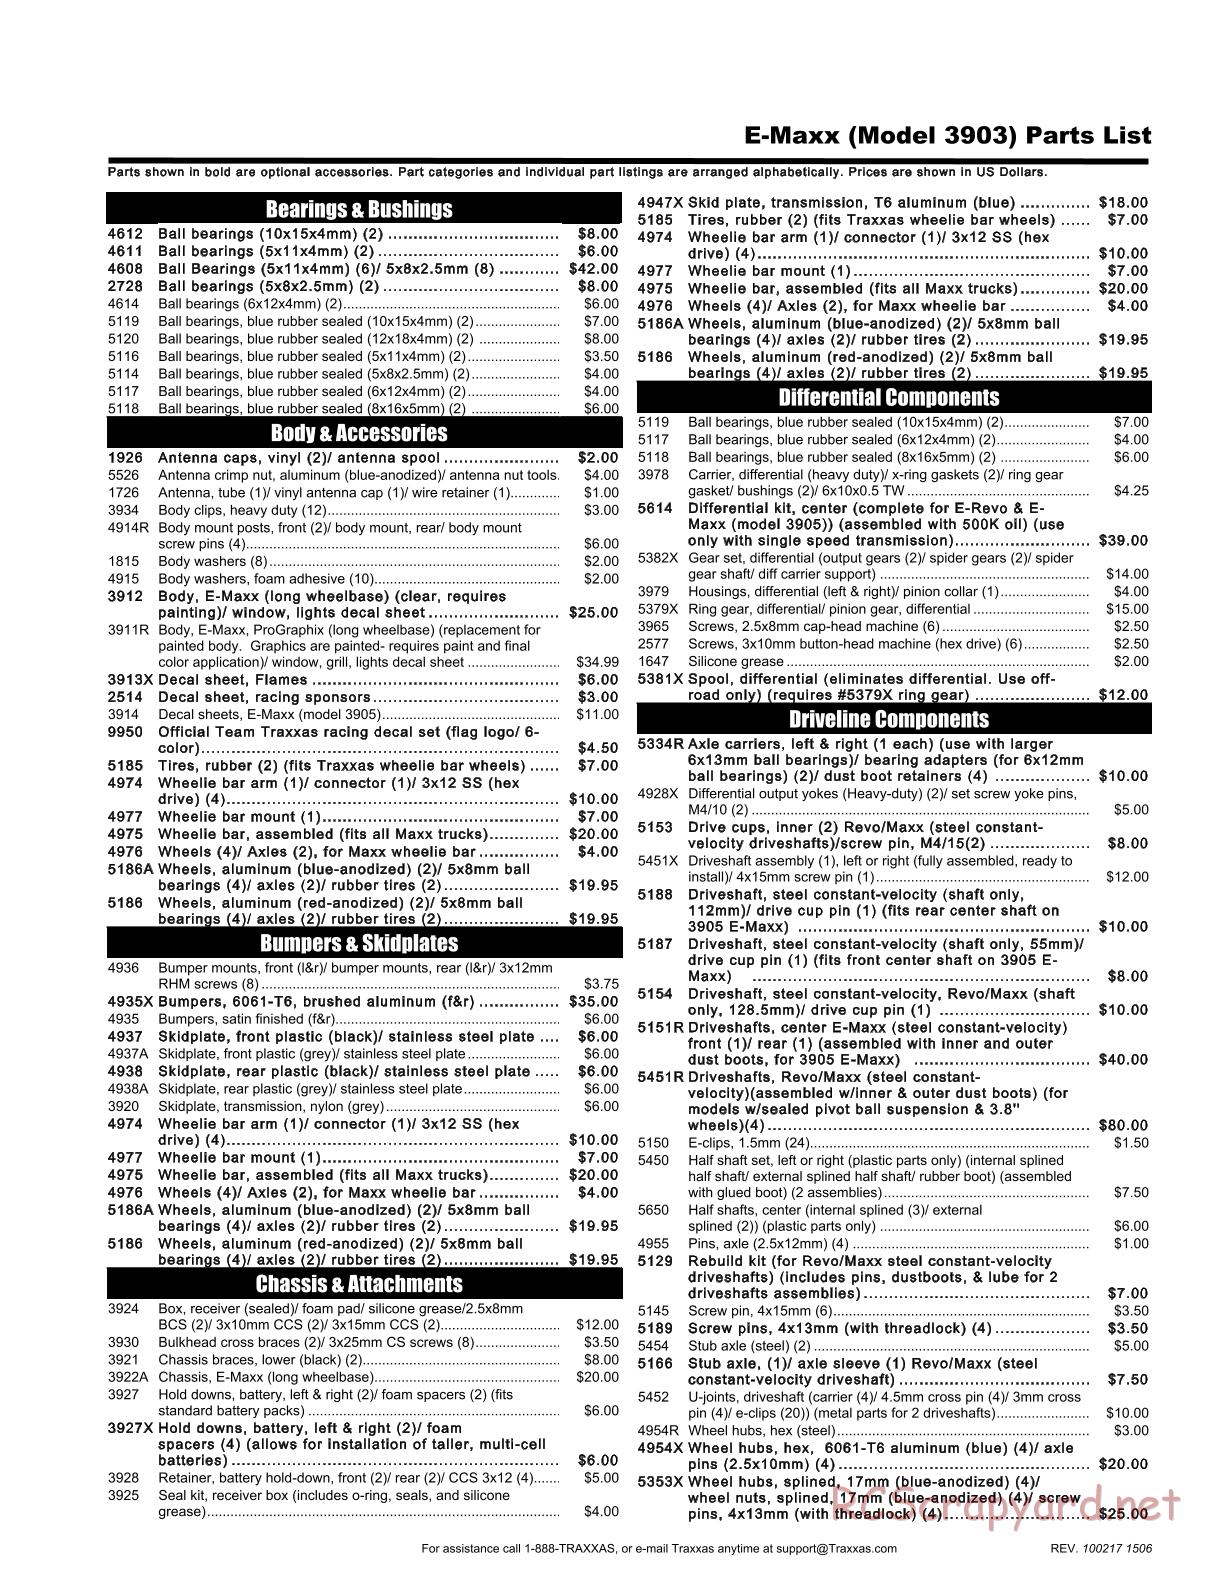 Traxxas - E-Maxx (2010) - Parts List - Page 1